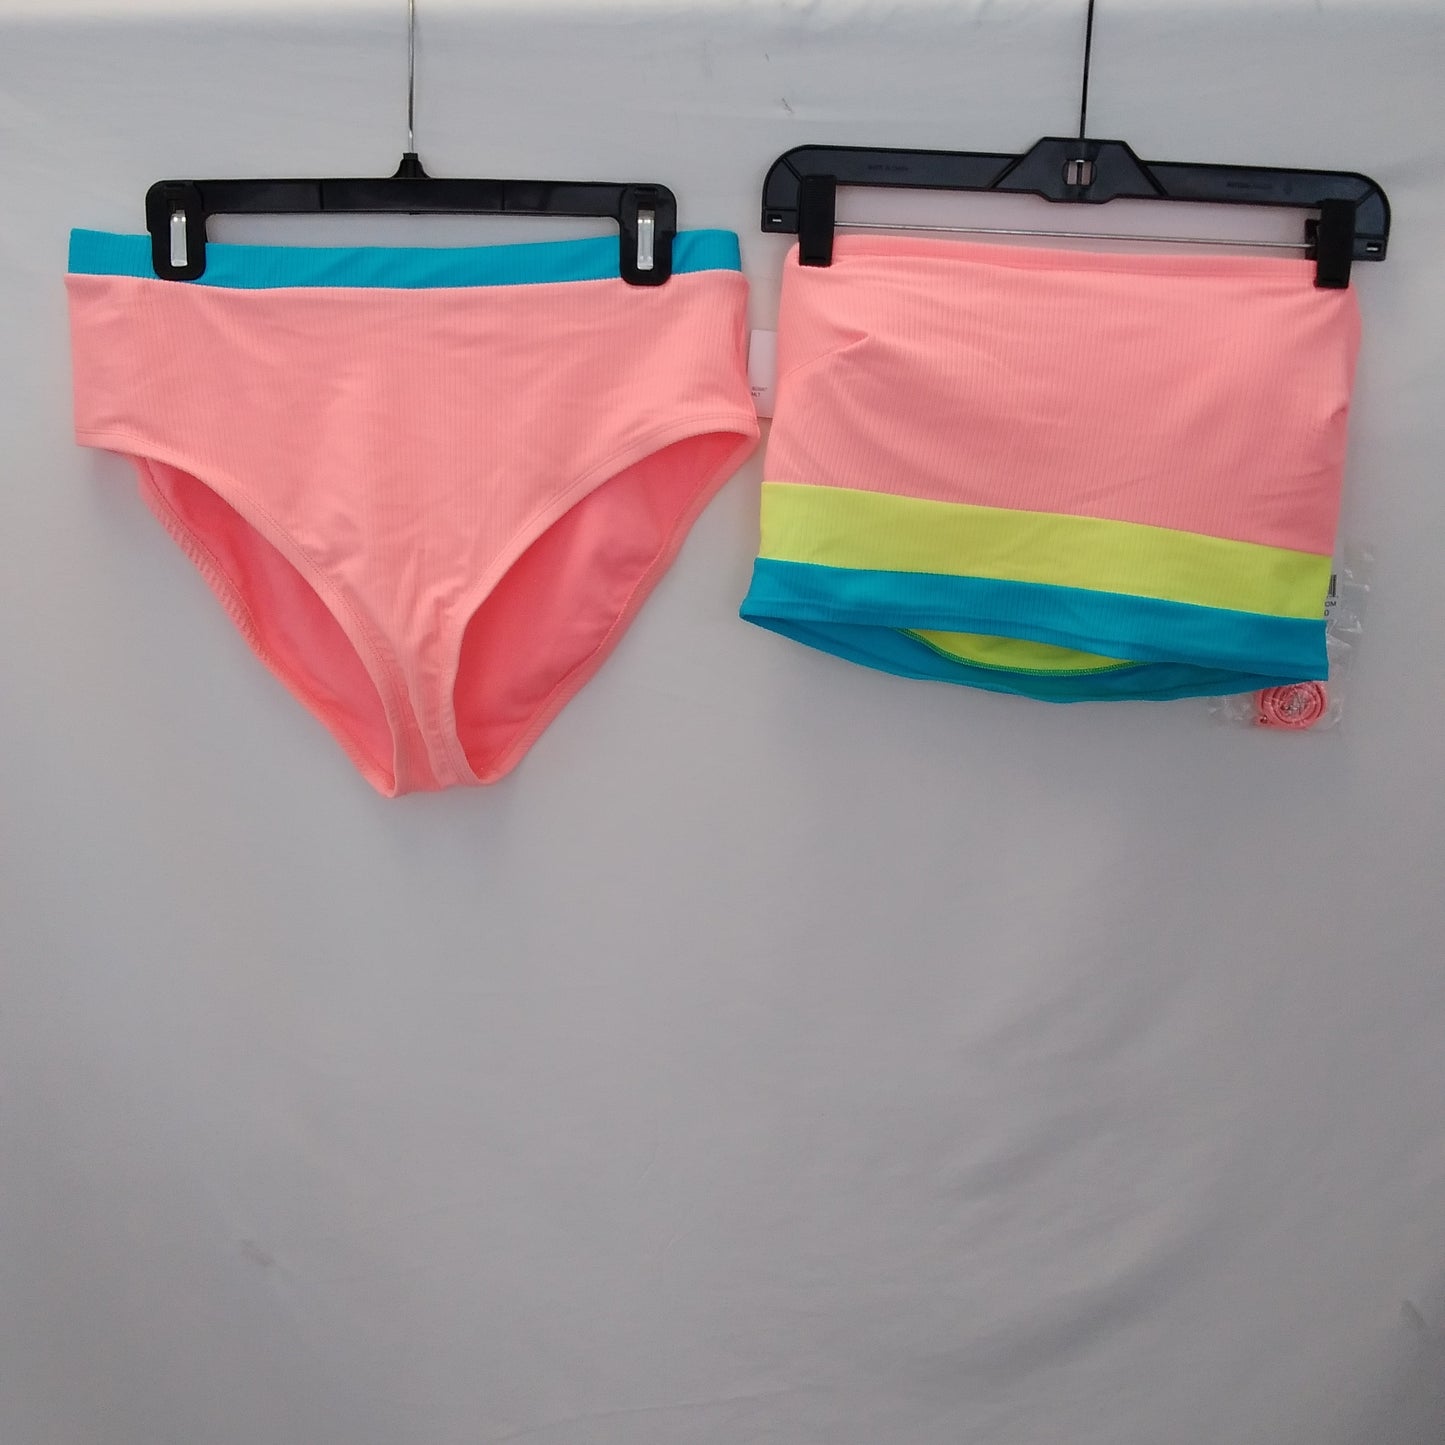 NWT - Cabana by Crown & Ivy Pink Blue Strapless Bikini - XL